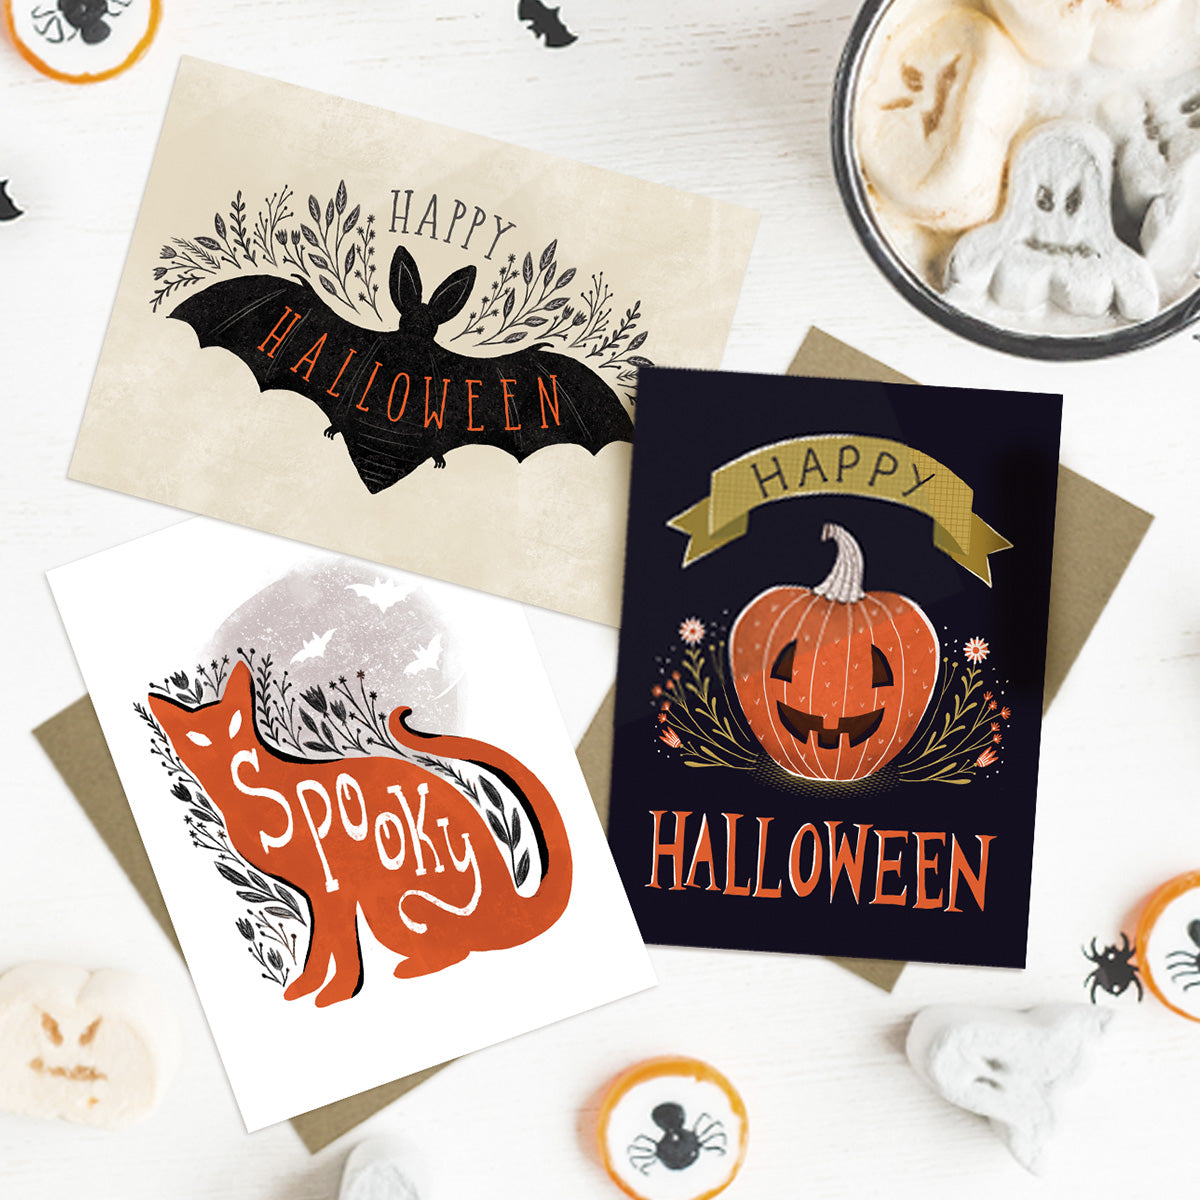 Jack o' lantern Pumpkin - Halloween Card